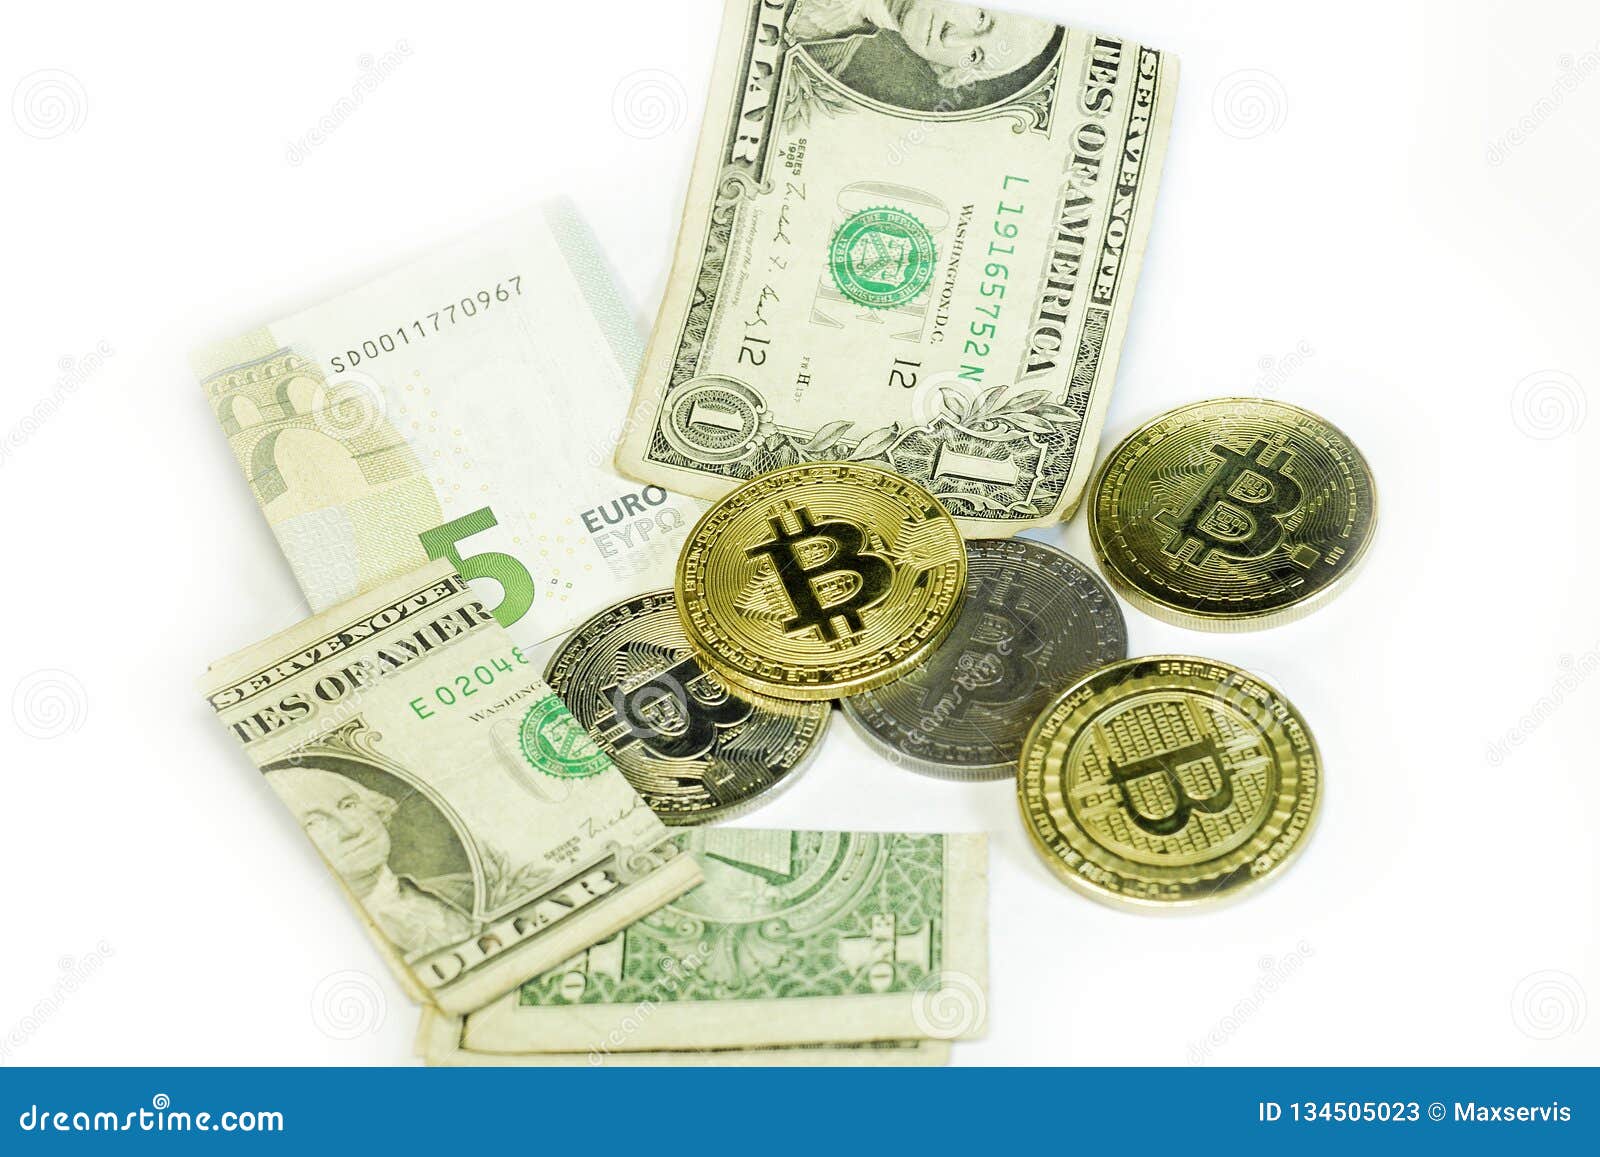 money laundering bitcoins